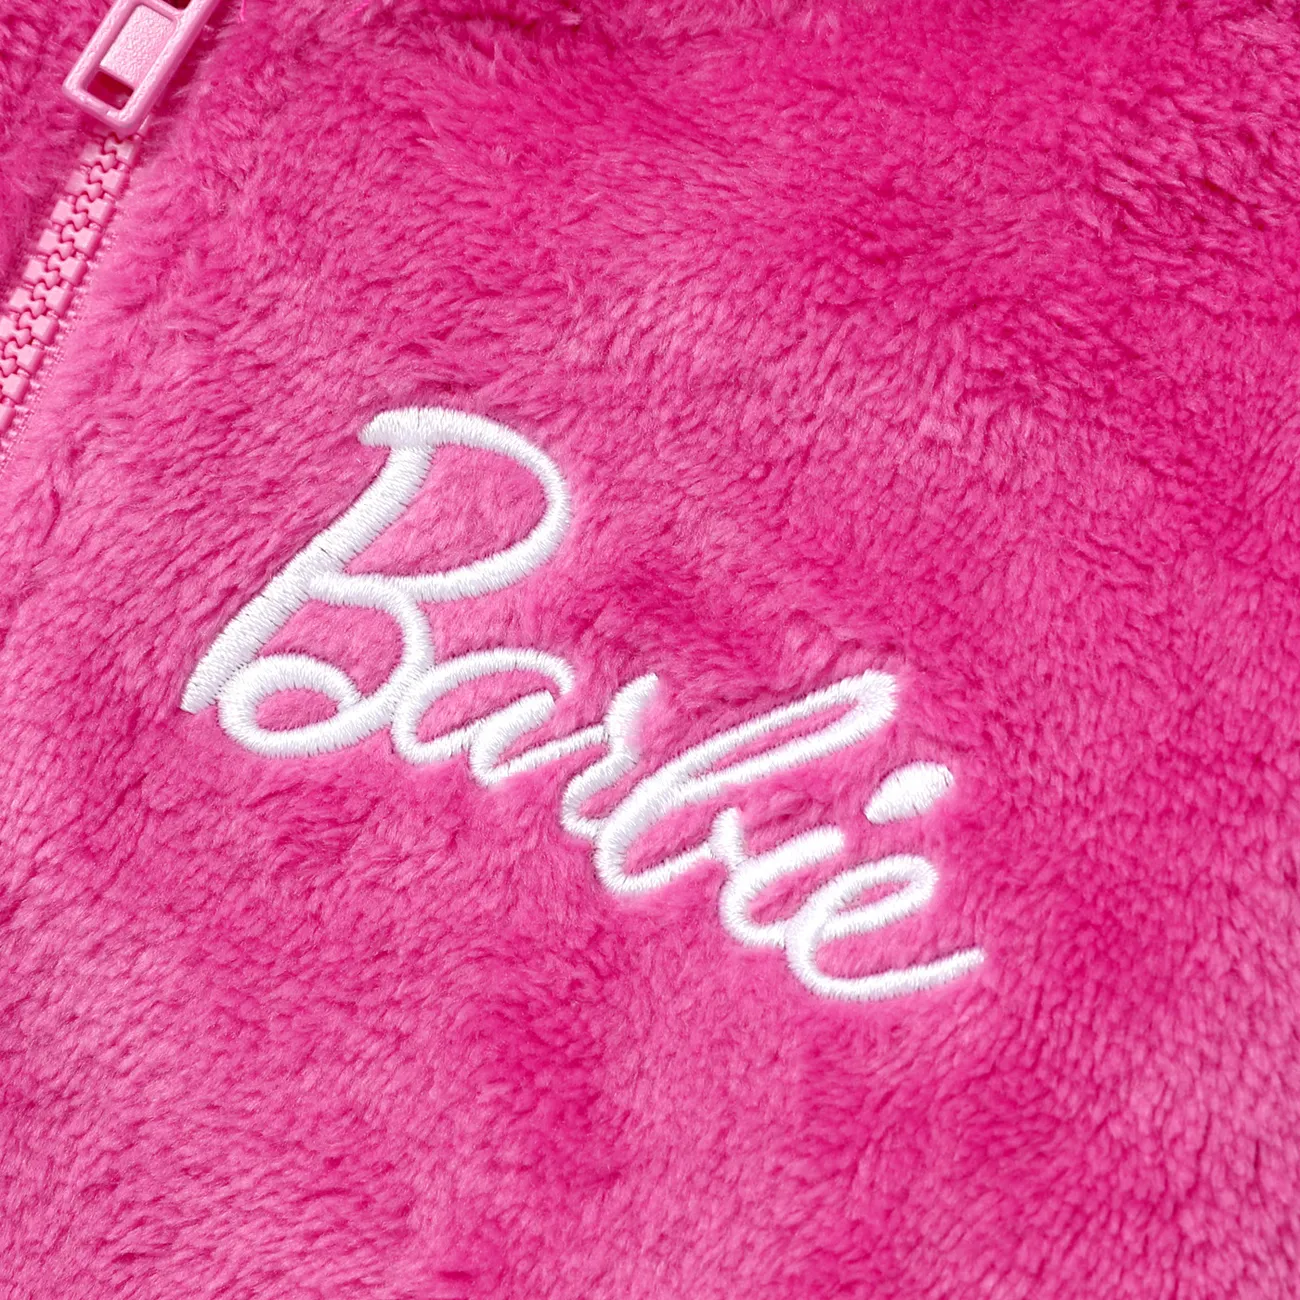 Barbie Plush Embroidered Graphic Coat Roseo big image 1